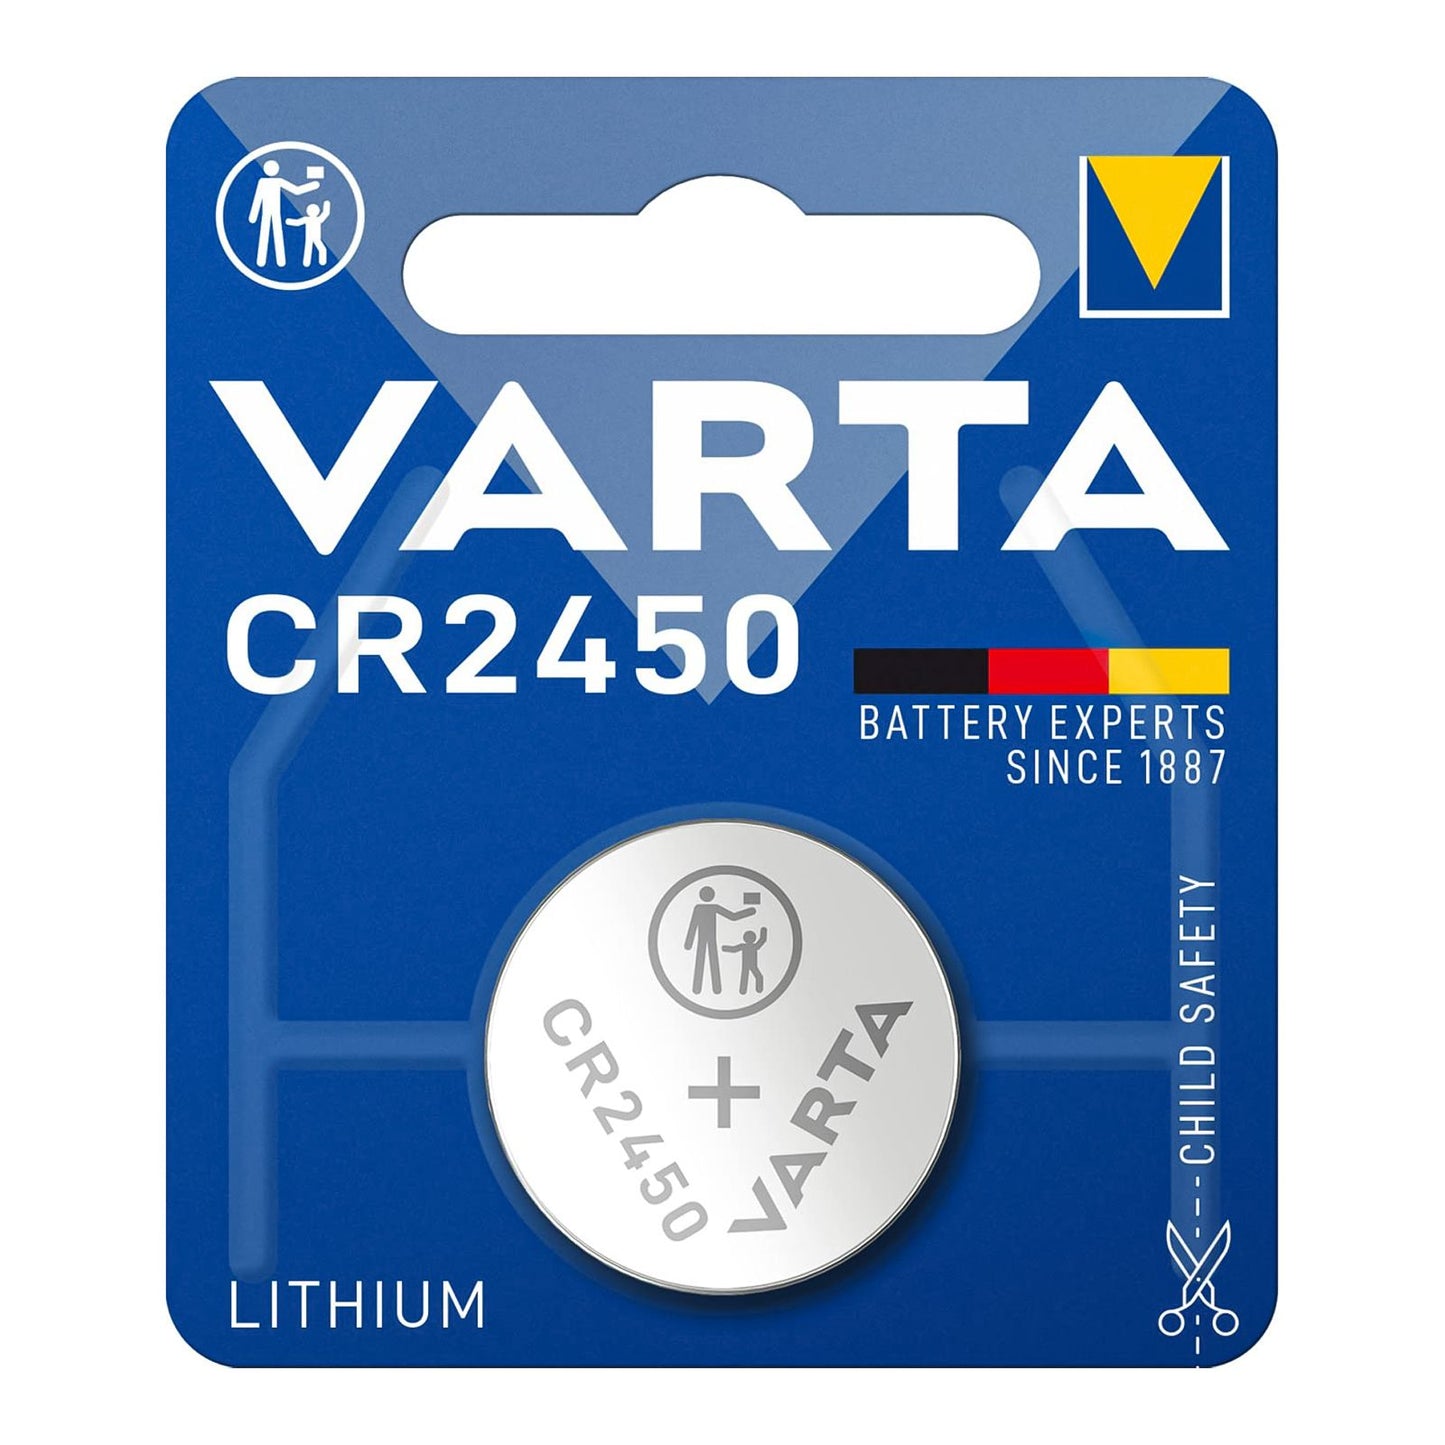 VARTA CR2450 Lithium coin cell battery 3V, flat cell, specialist, diameter 24.5mm